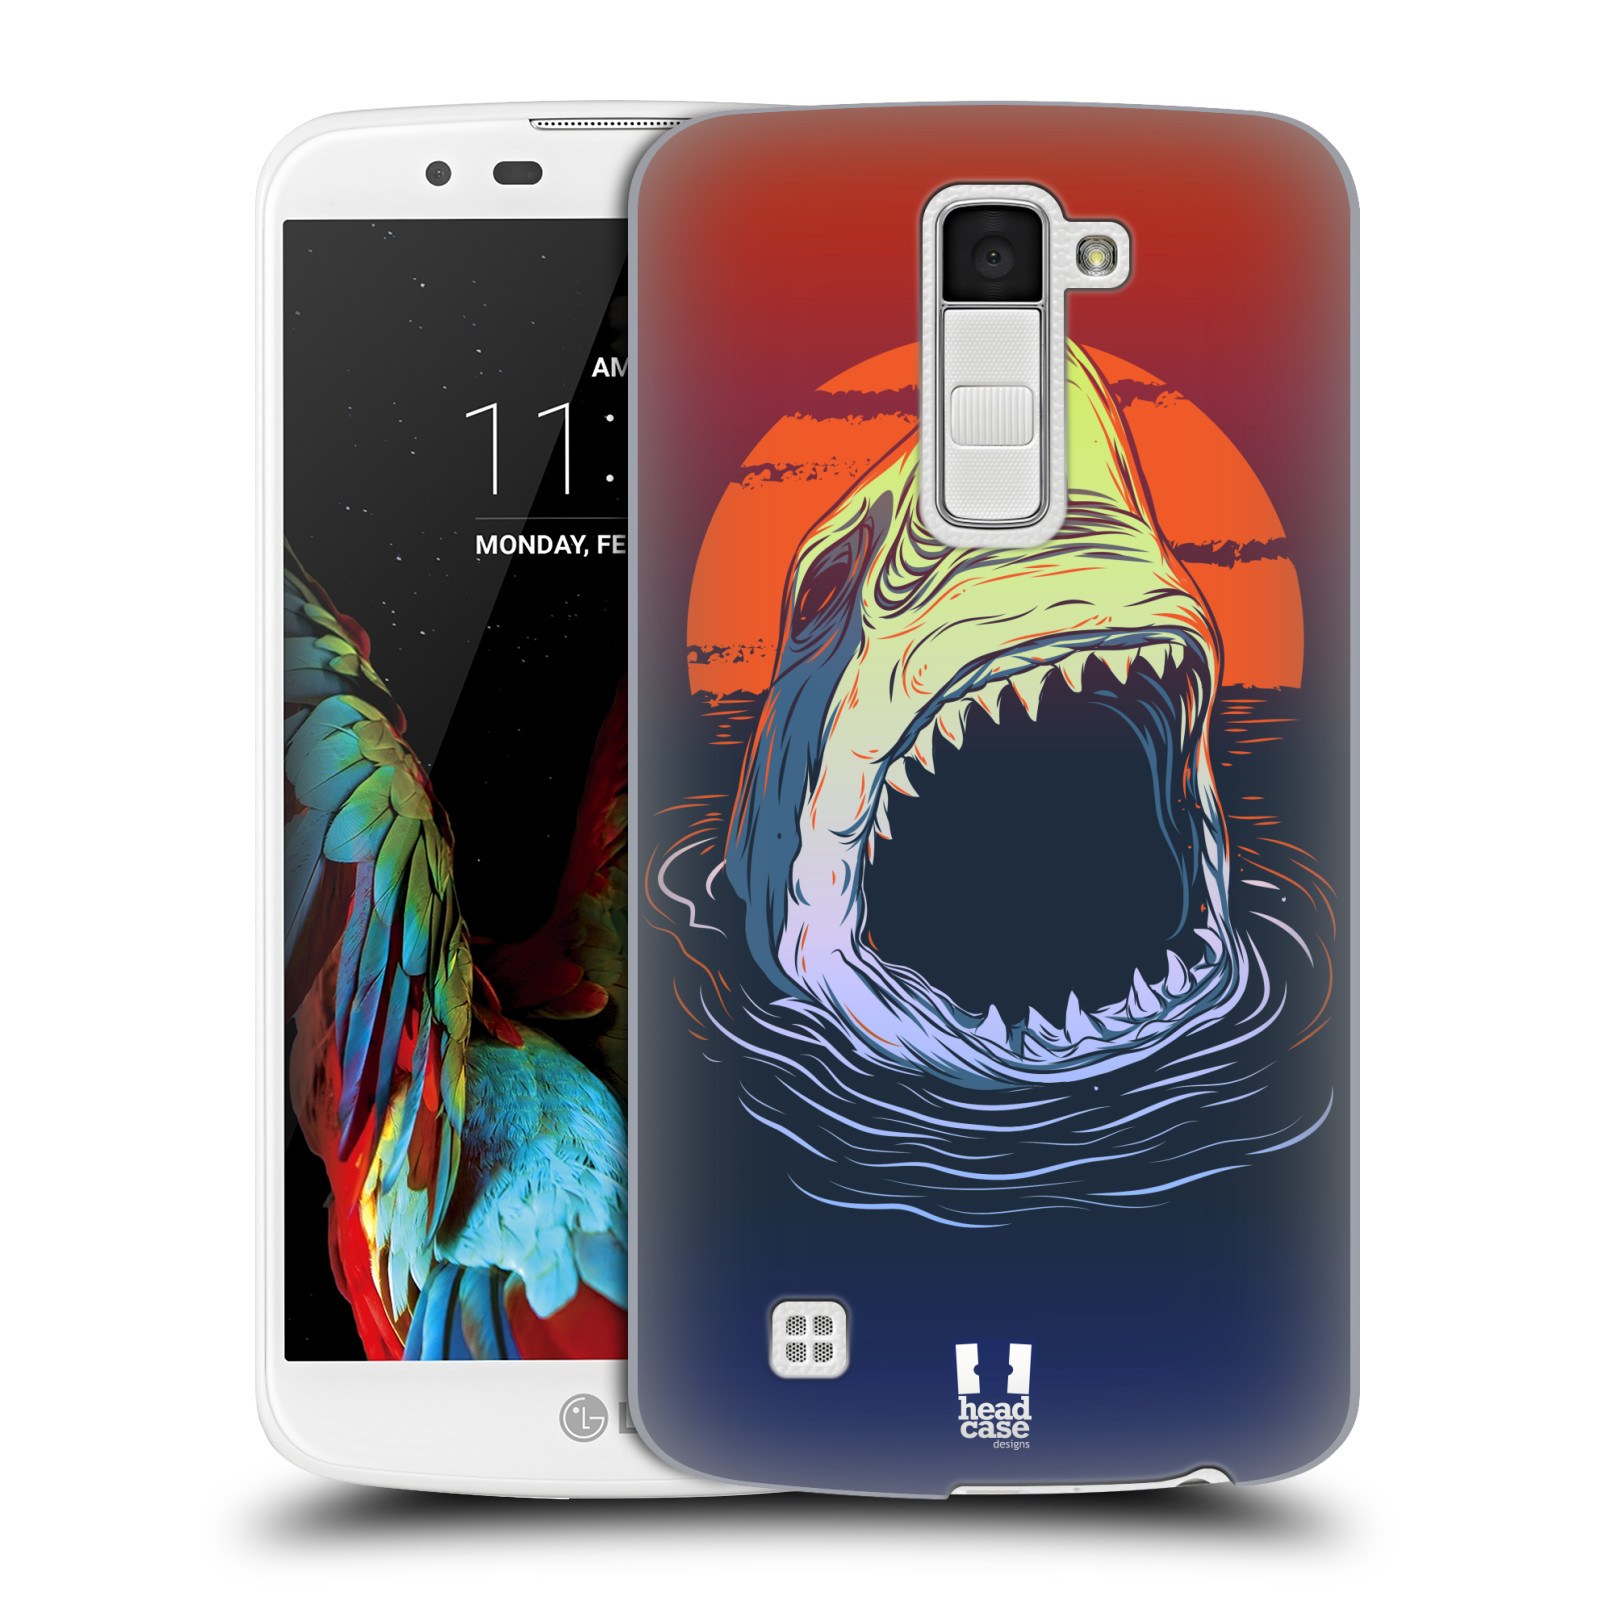 HEAD CASE plastový obal na mobil LG K10 vzor mořská monstra žralok